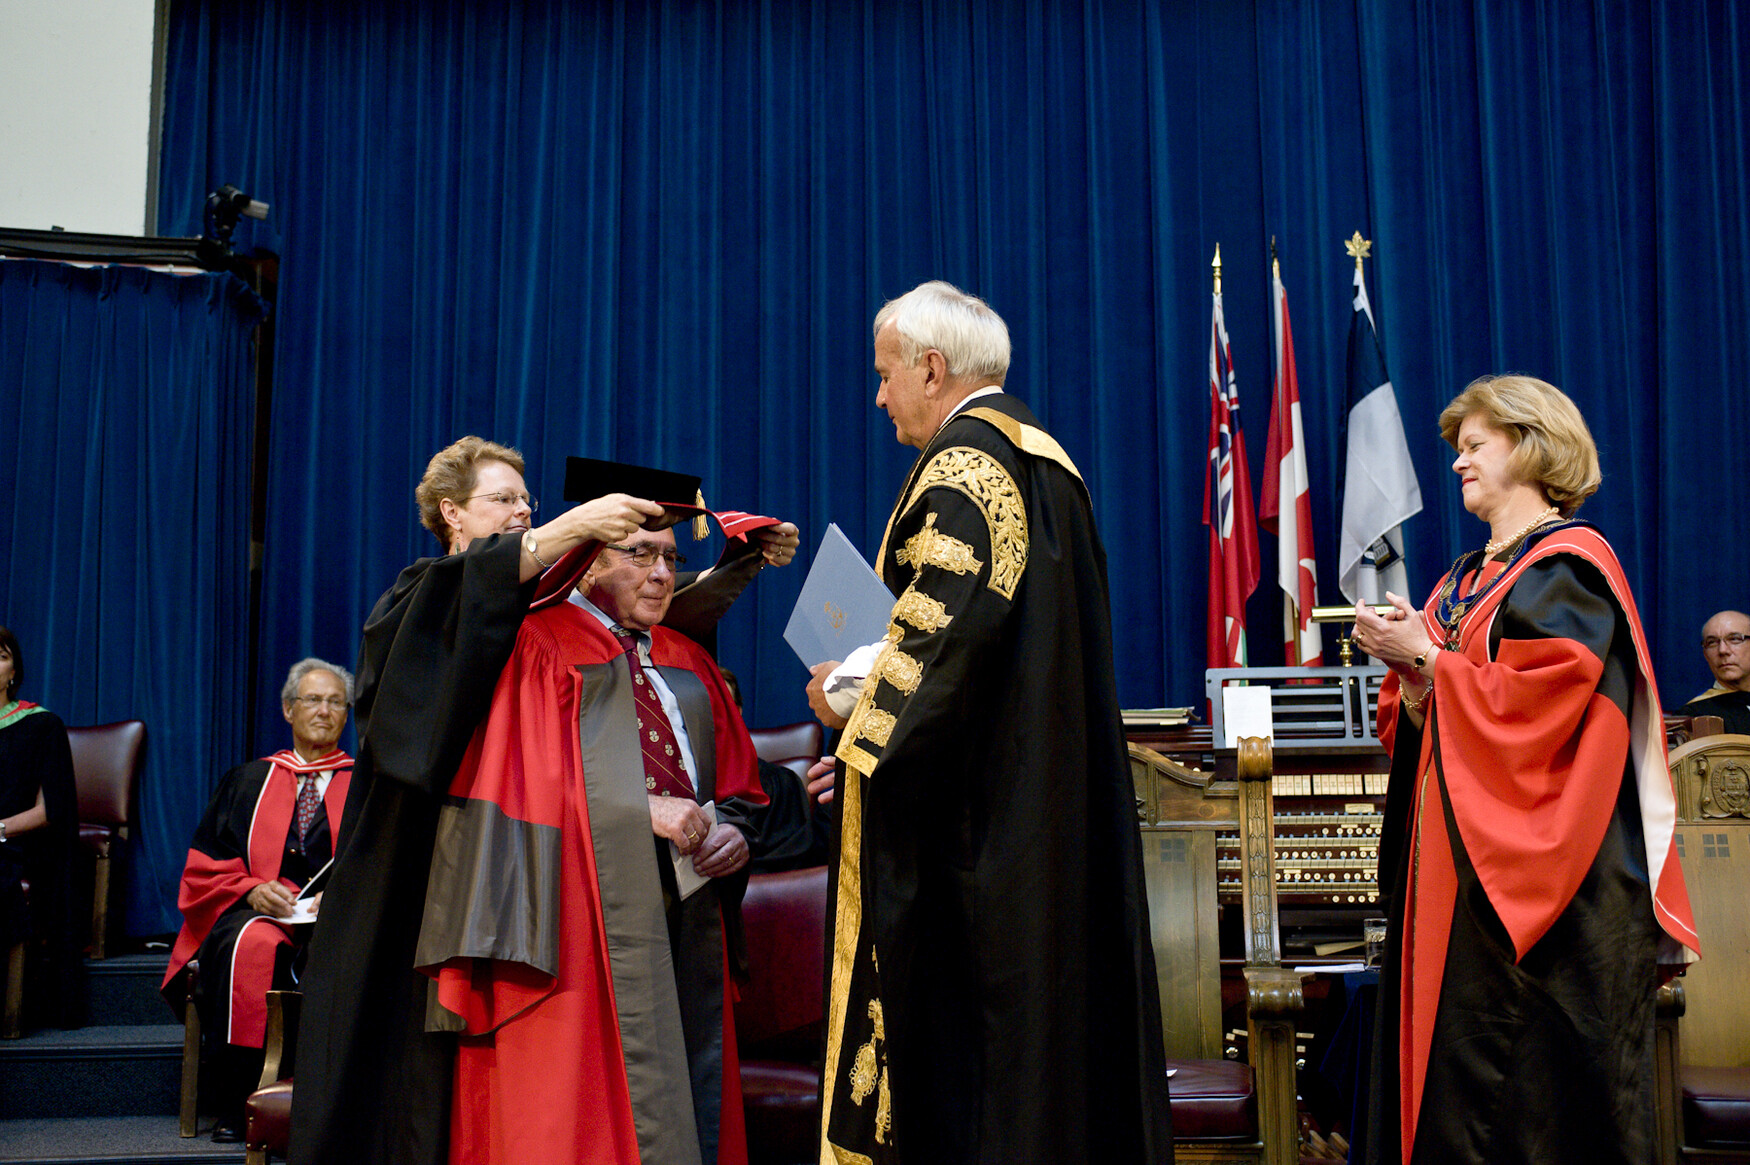 Professor Patricia Brubaker honours Professor Mladen Vranic with an honorary degree